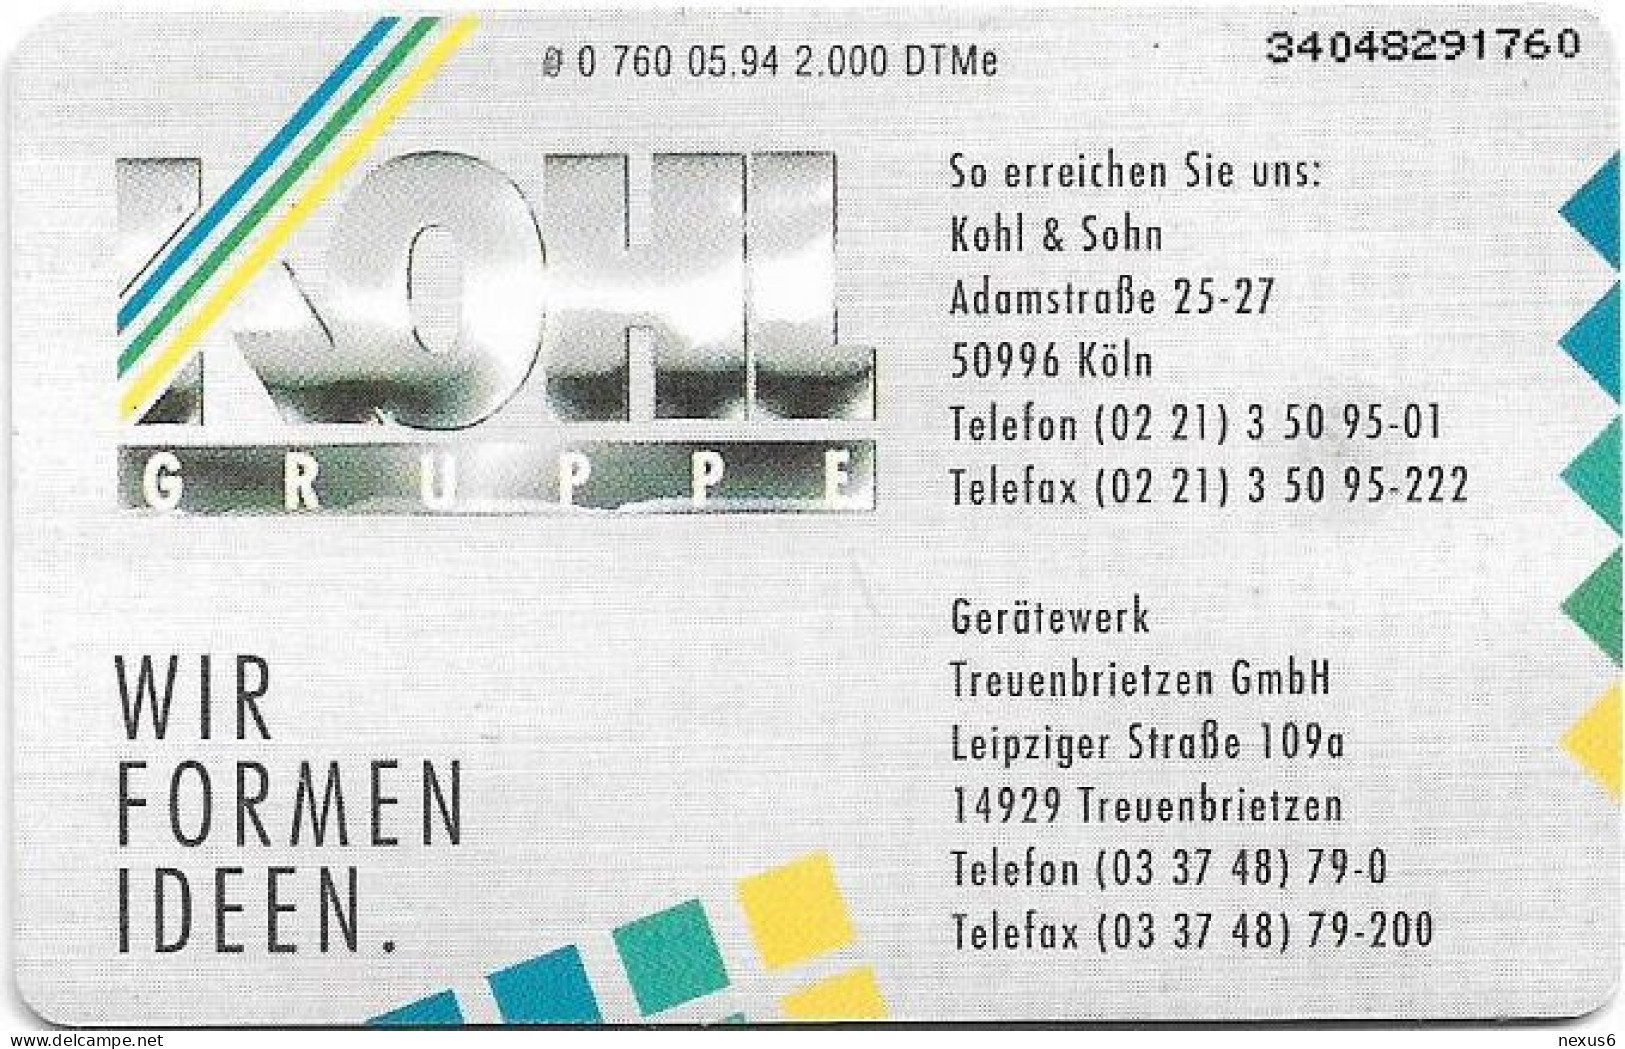 Germany - Kohl Gruppe - Eisenverarbeitung - O 0760 - 05.1994, 6DM, 2.000ex, Used - O-Series : Series Clientes Excluidos Servicio De Colección